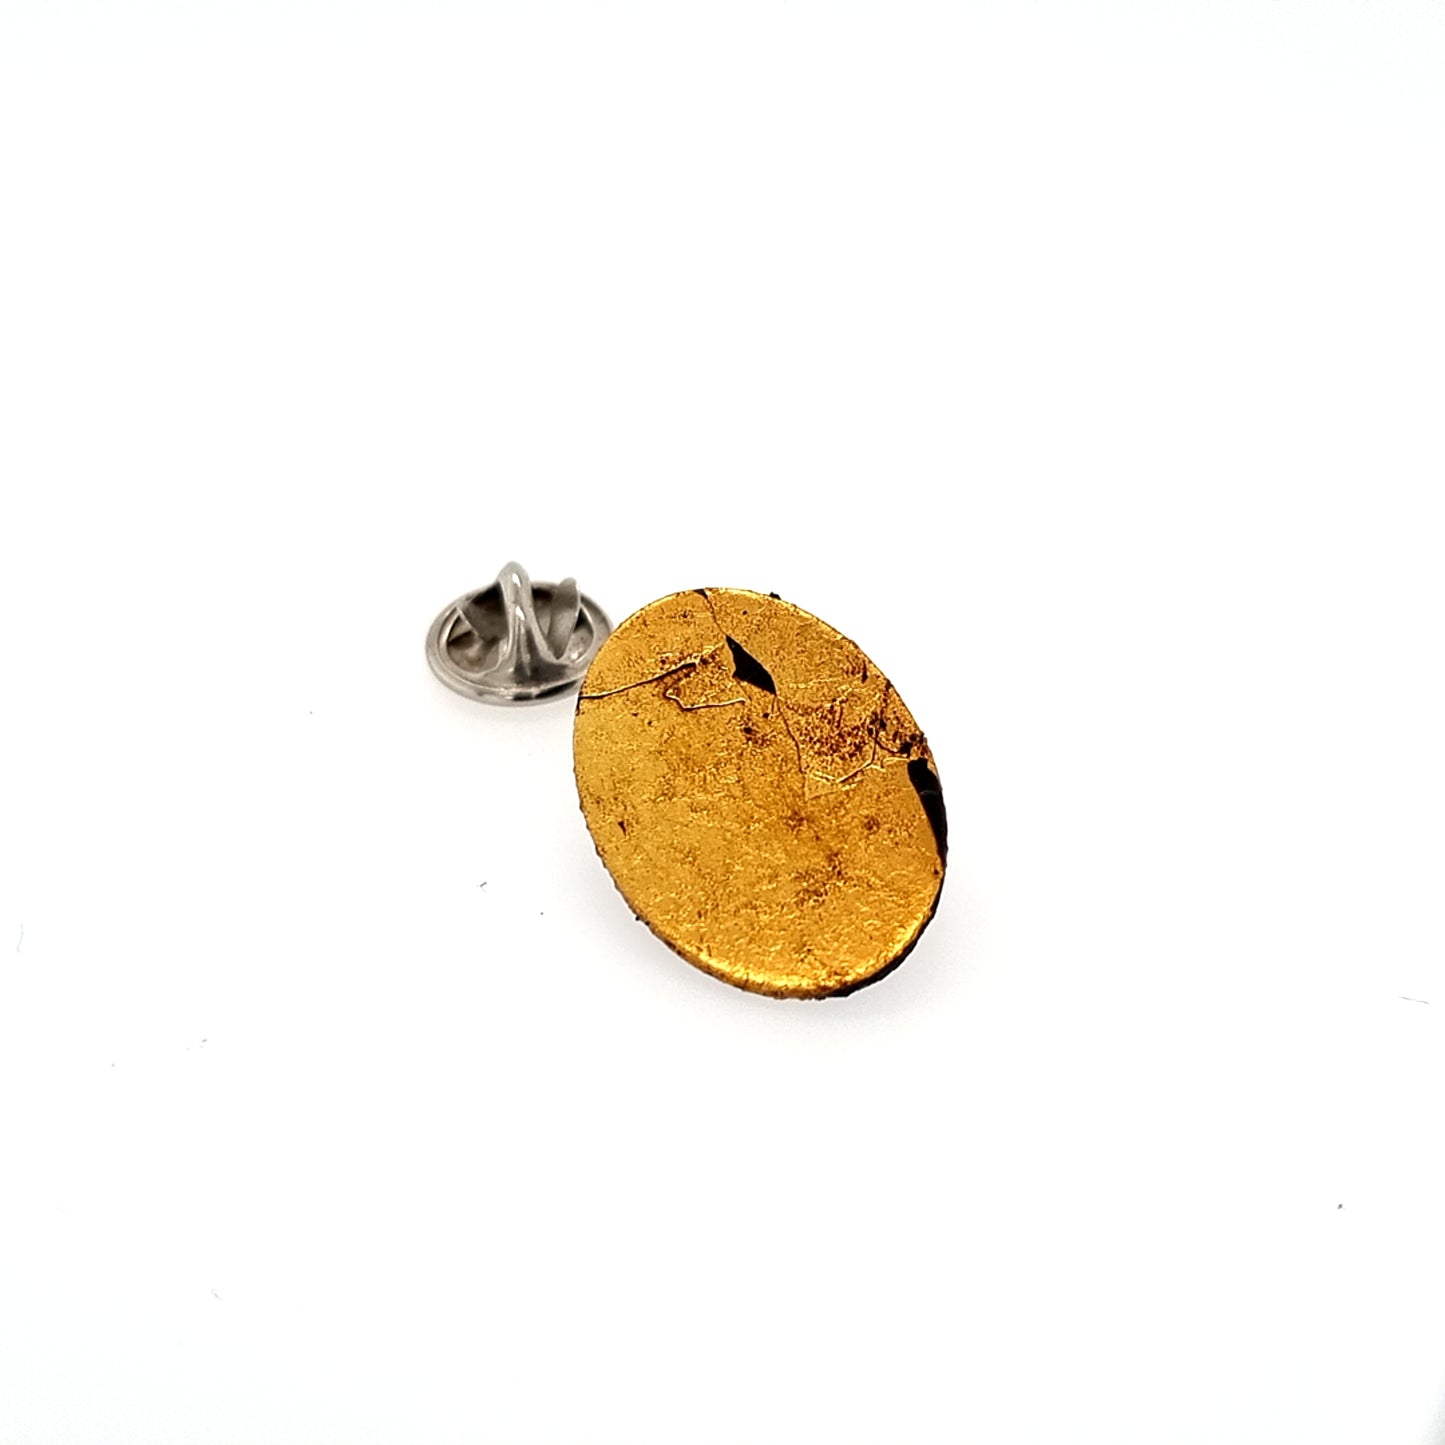 Haku-e Midi Oval Pin with 22k gold leaf